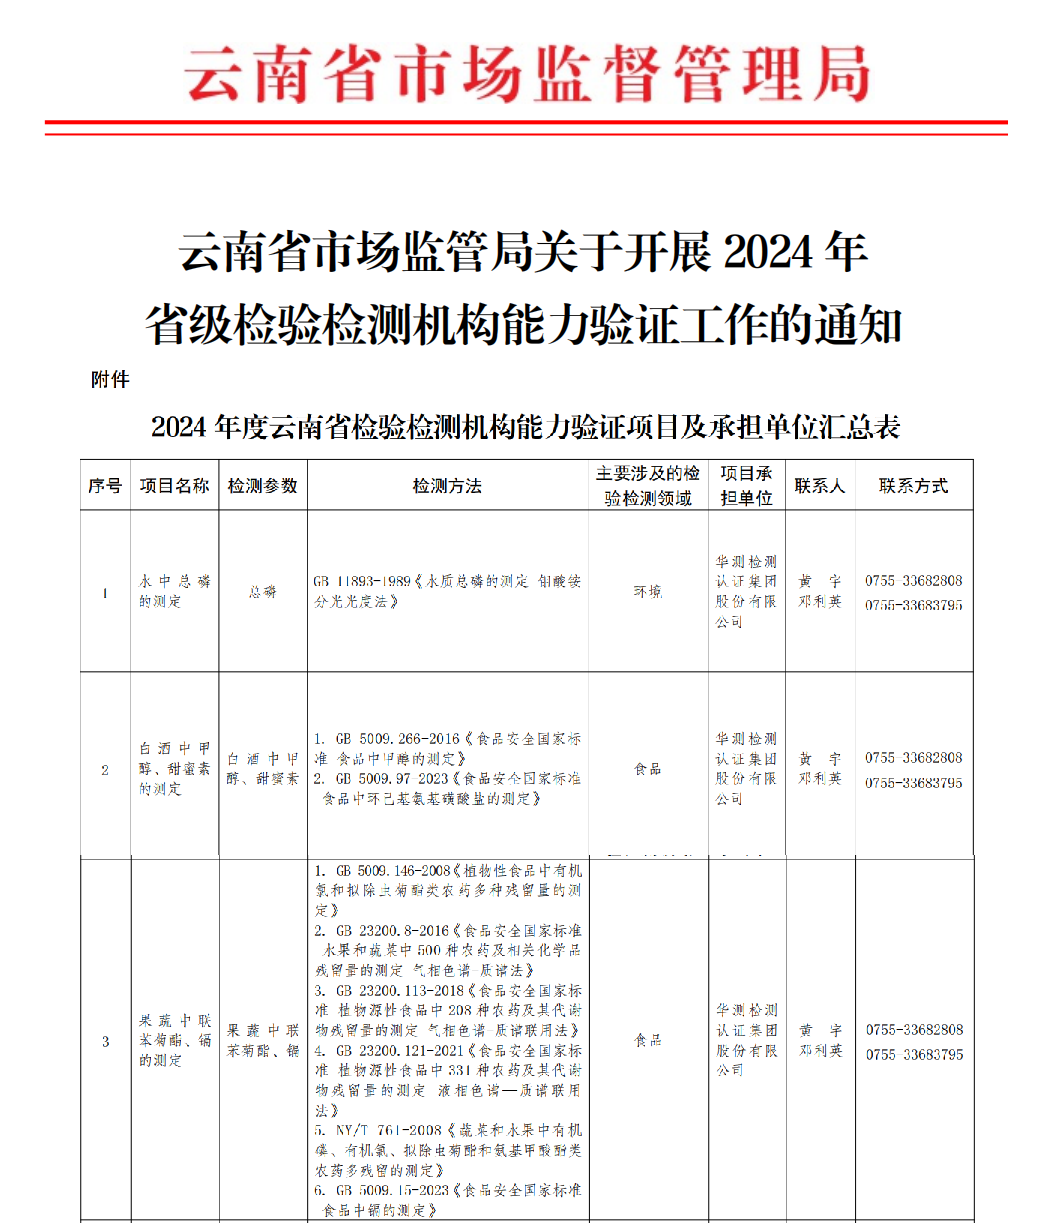 CTI华测检测相继承担上海、山西、云南2024年能力验证项目